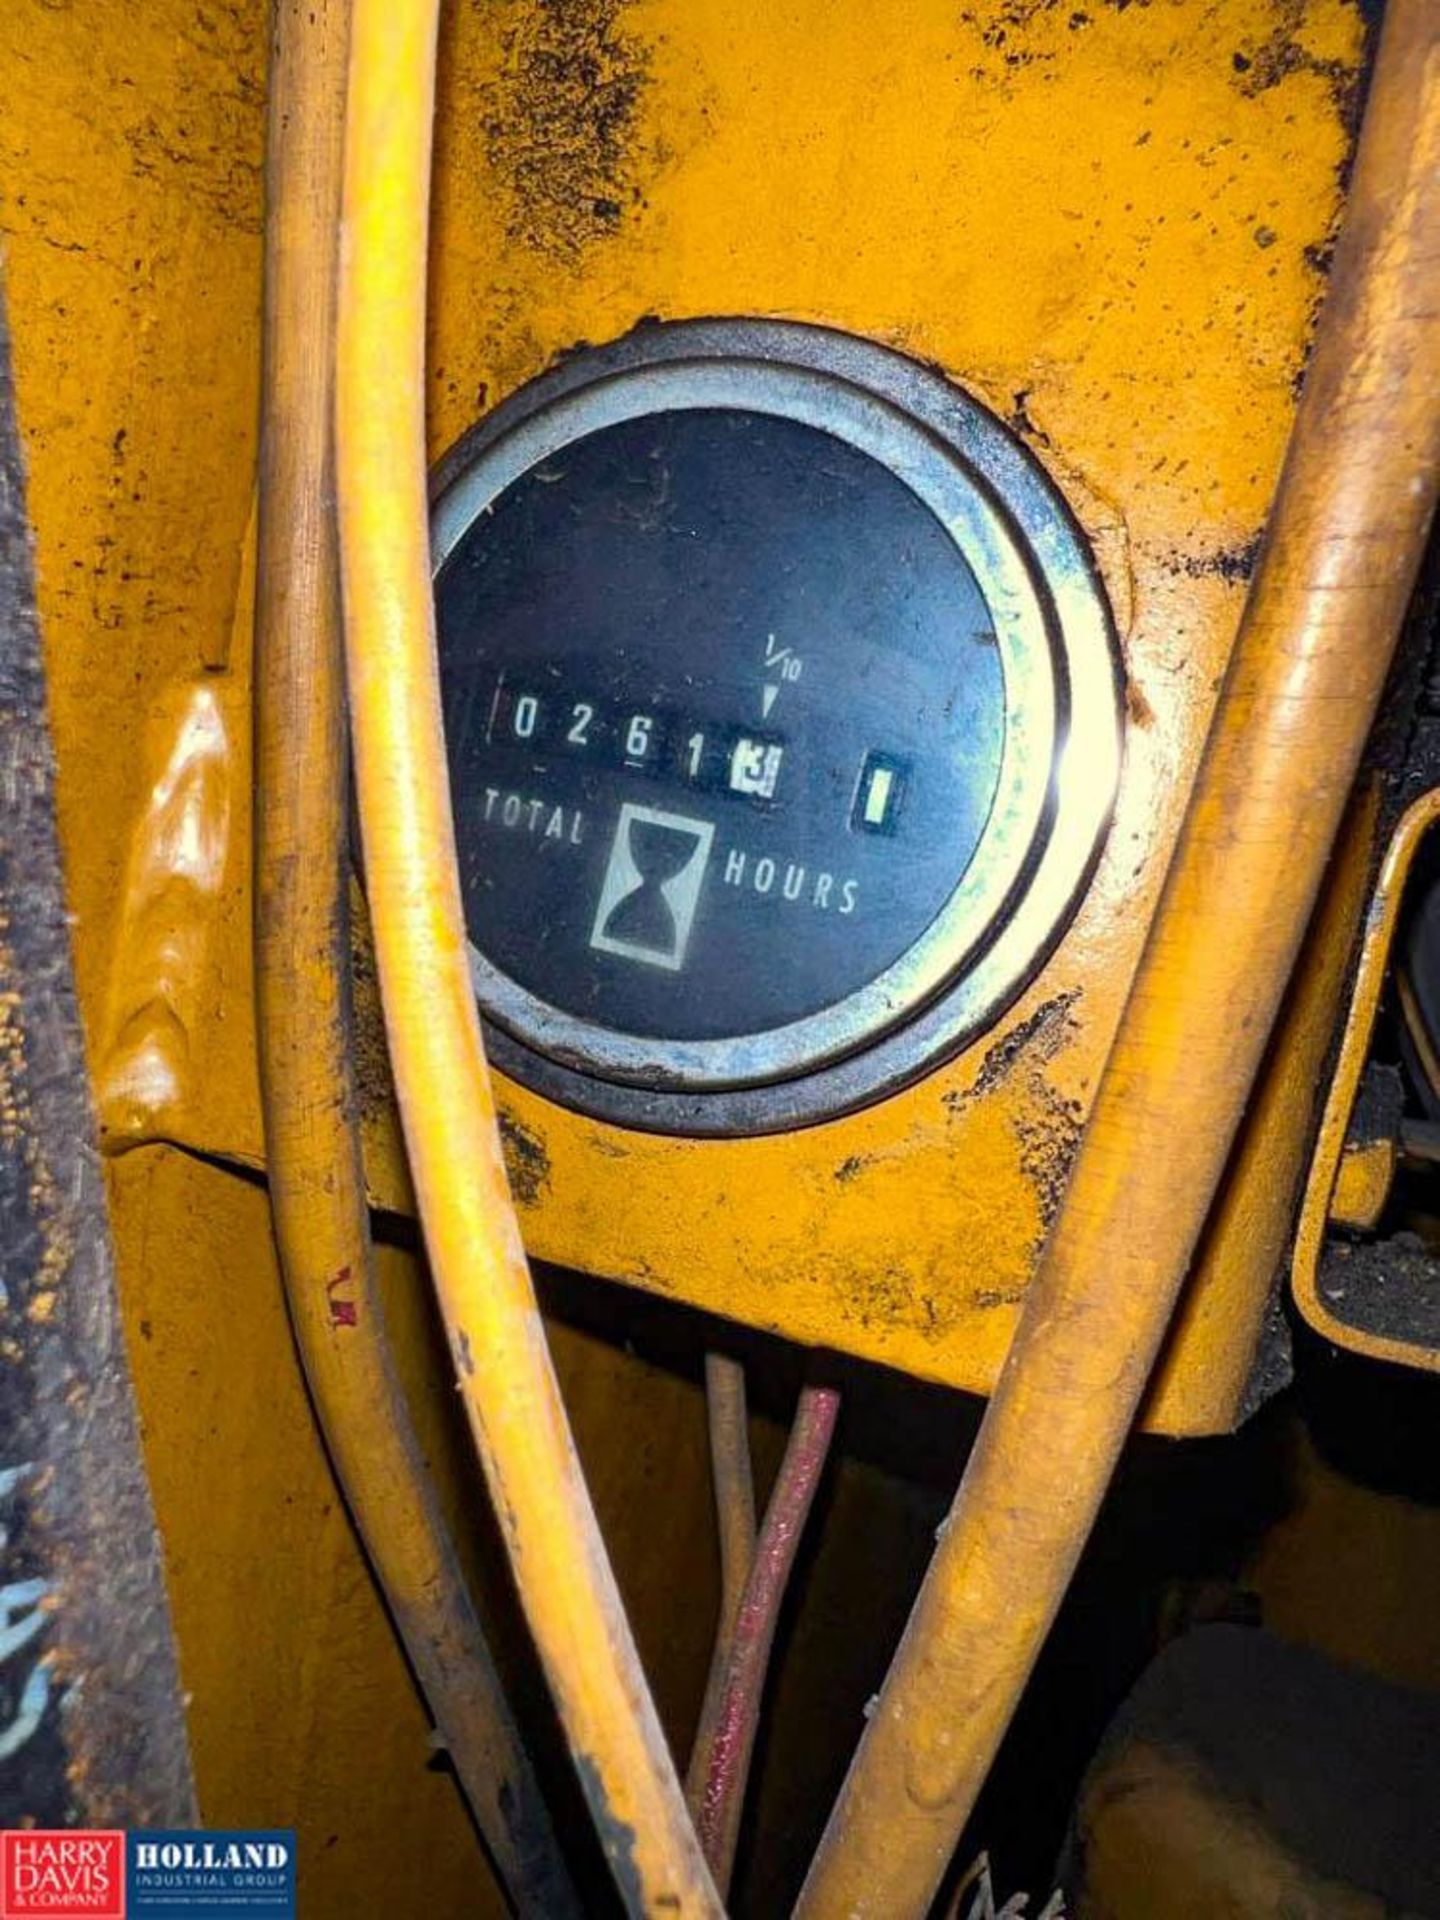 Fiat-Allis 345-B Wheel Loader, S/N: 76L01823 with 1.5 Cu. Yd. Bucket (261.3 Hours) - Image 6 of 6